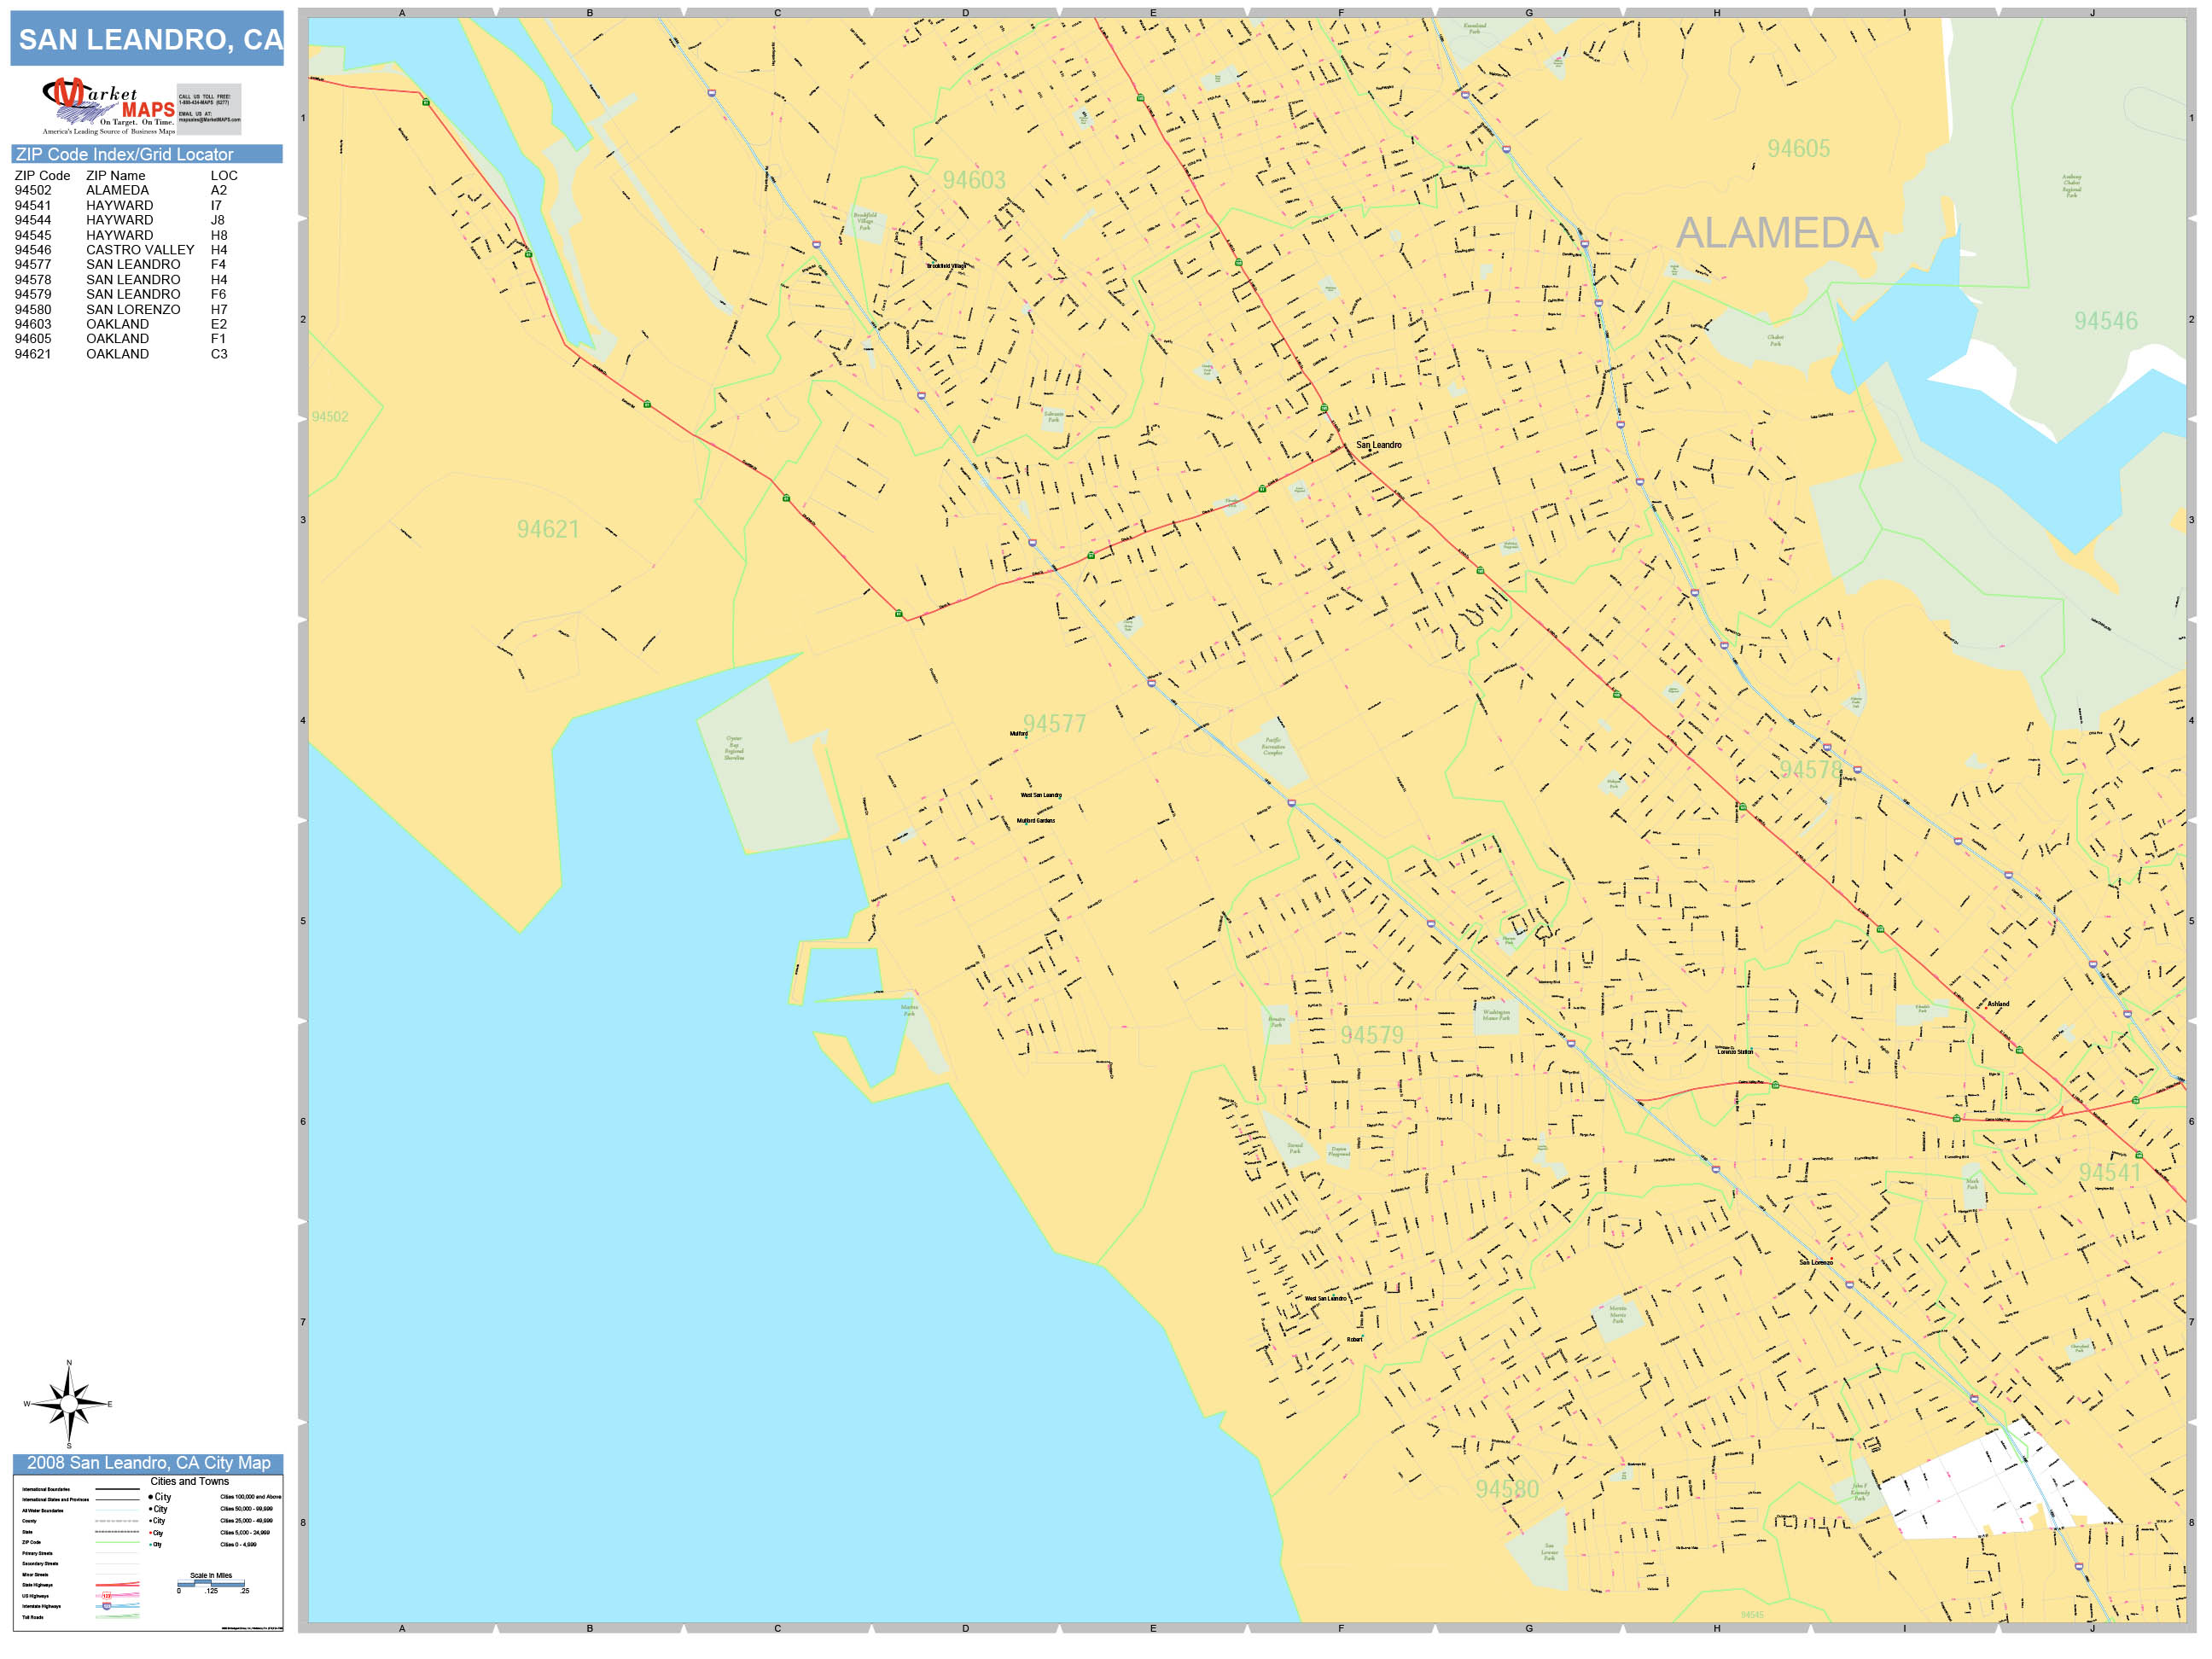 San Leandro California Wall Map (Basic Style) by MarketMAPS